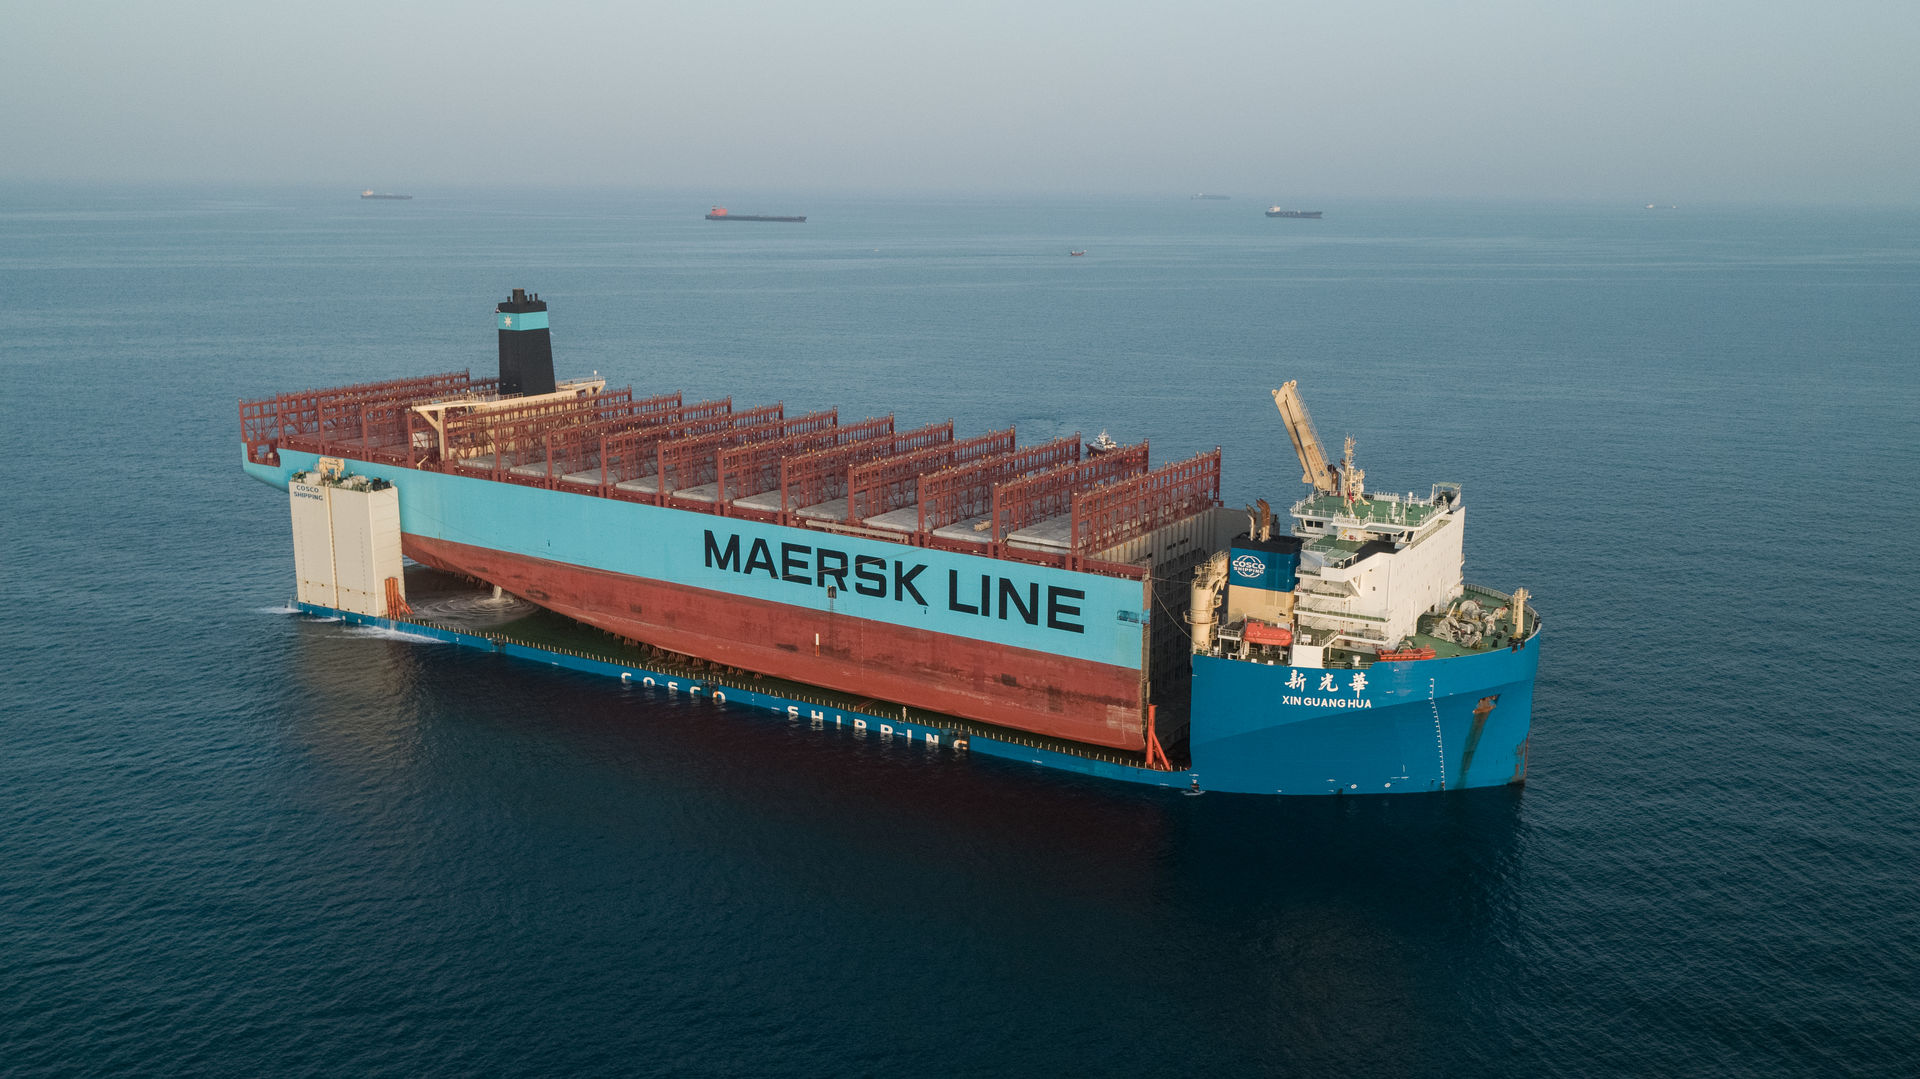 Maersk Honam